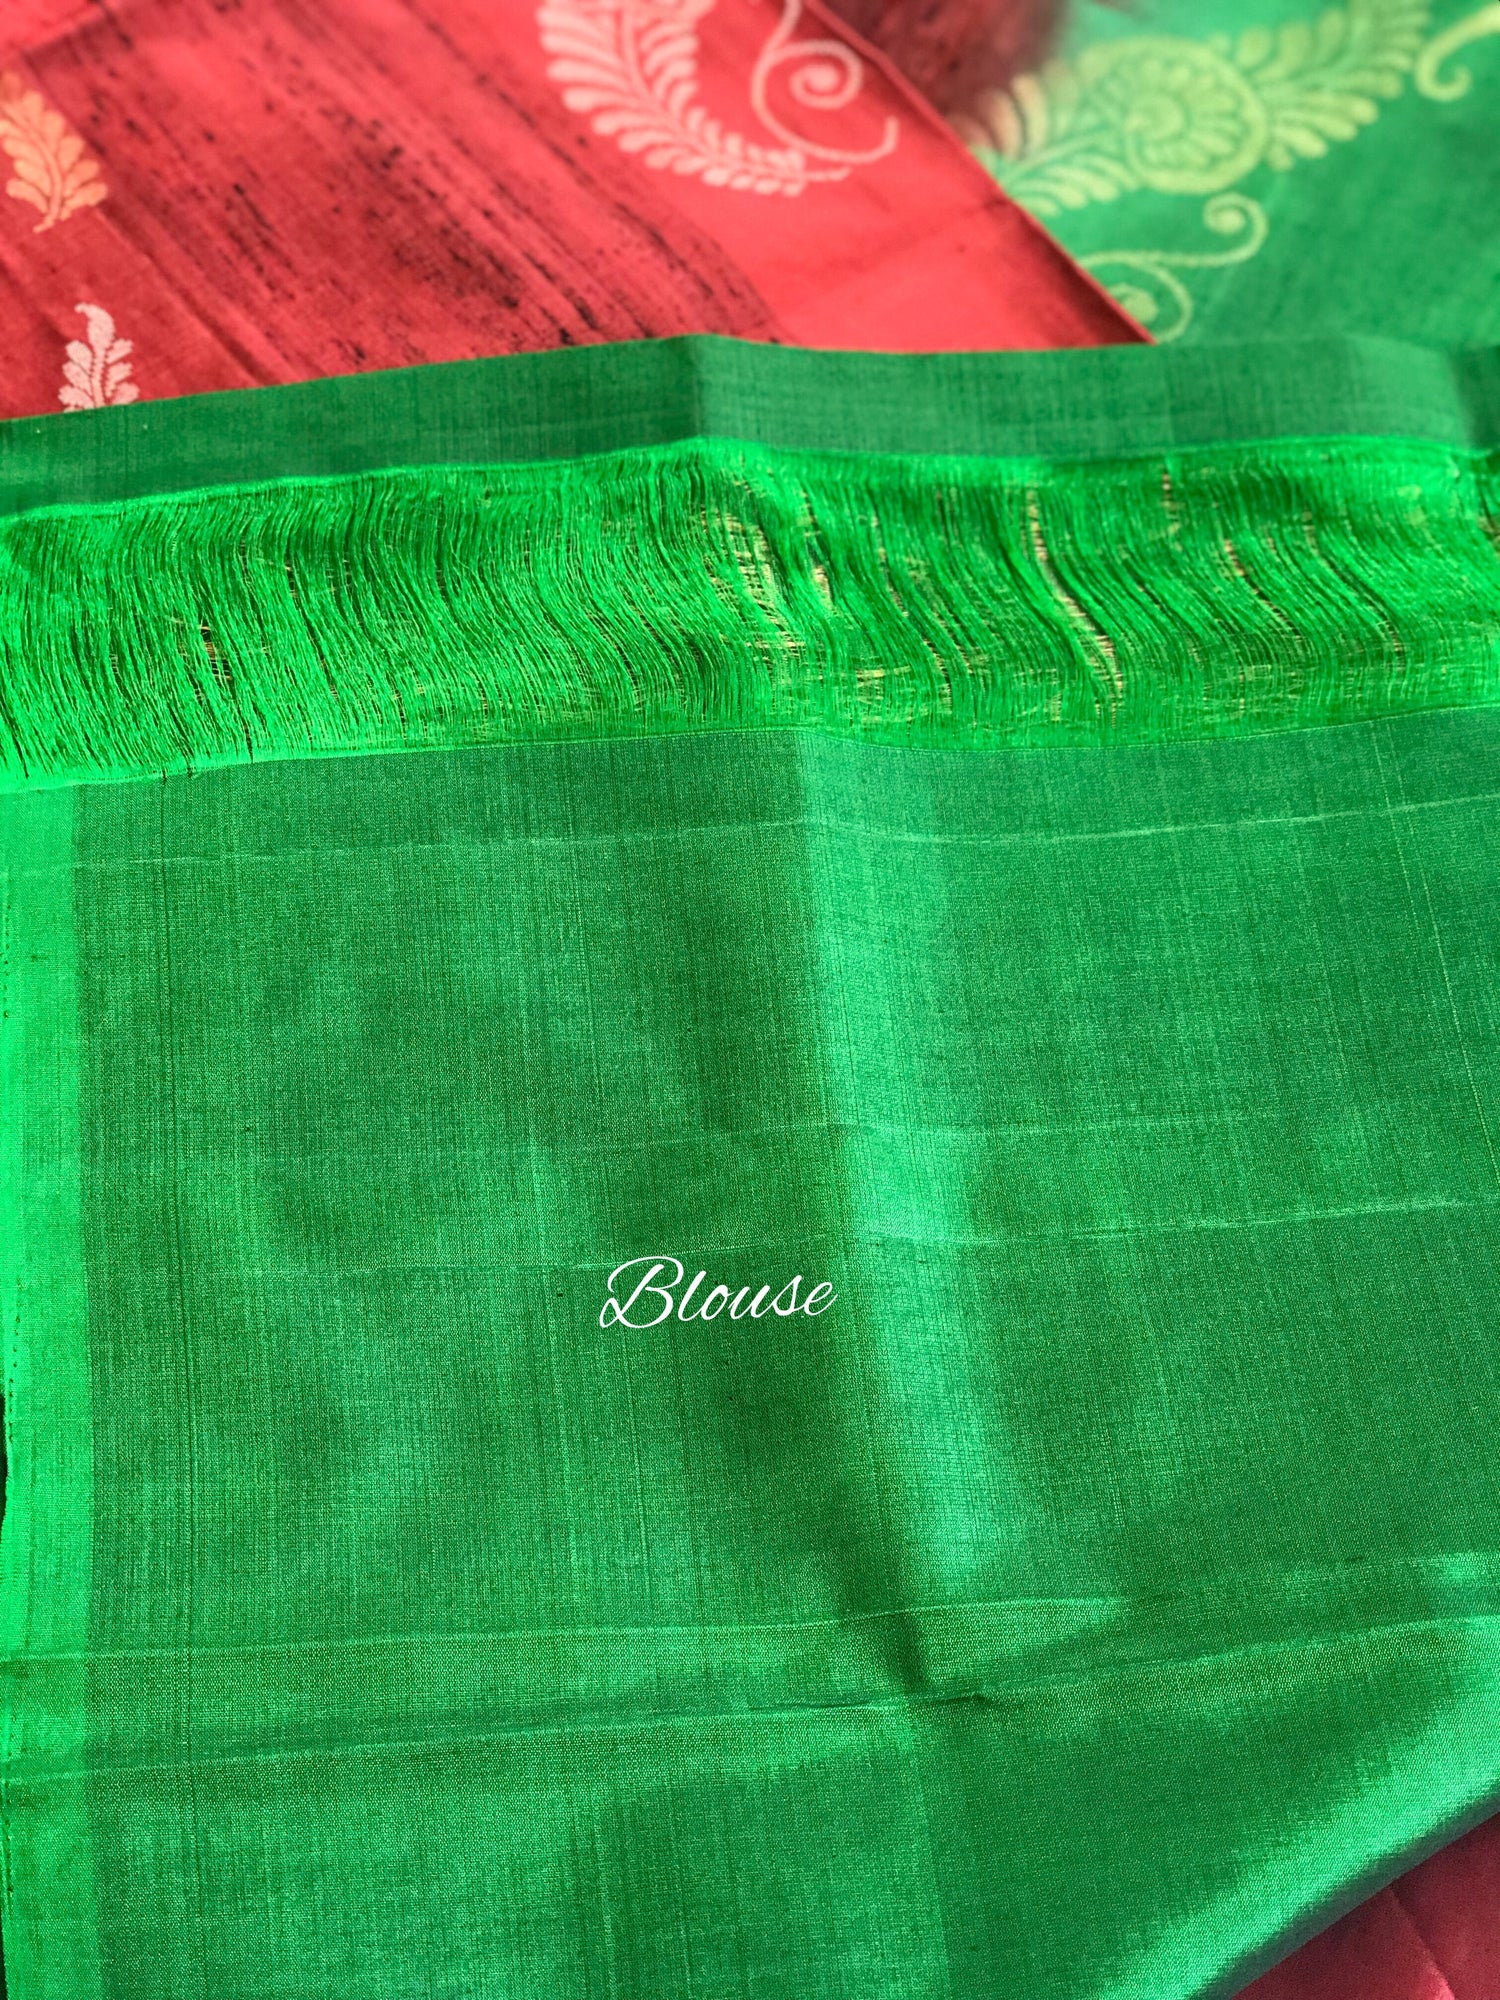 Handwoven Soft Silk With Kanchivaram saree